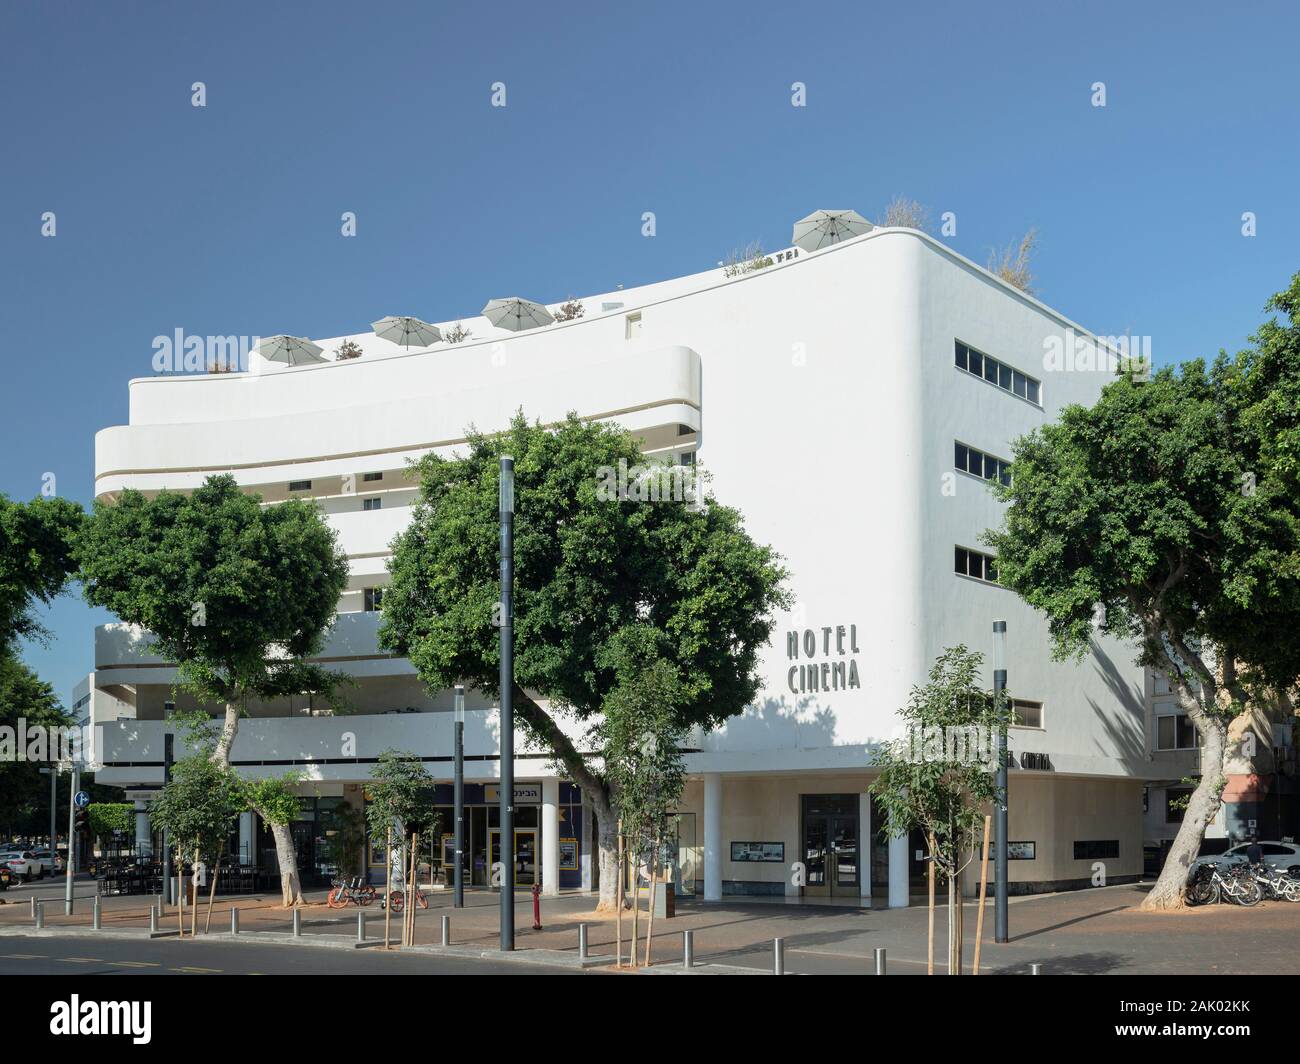 1 Zamenhoff Street, Esther Cinema (ora Hotel Cinema) da Yehuda Magidovitch, 1930. Tel Aviv, Tel Aviv, Israele. Architetto: vari, 2019. Foto Stock